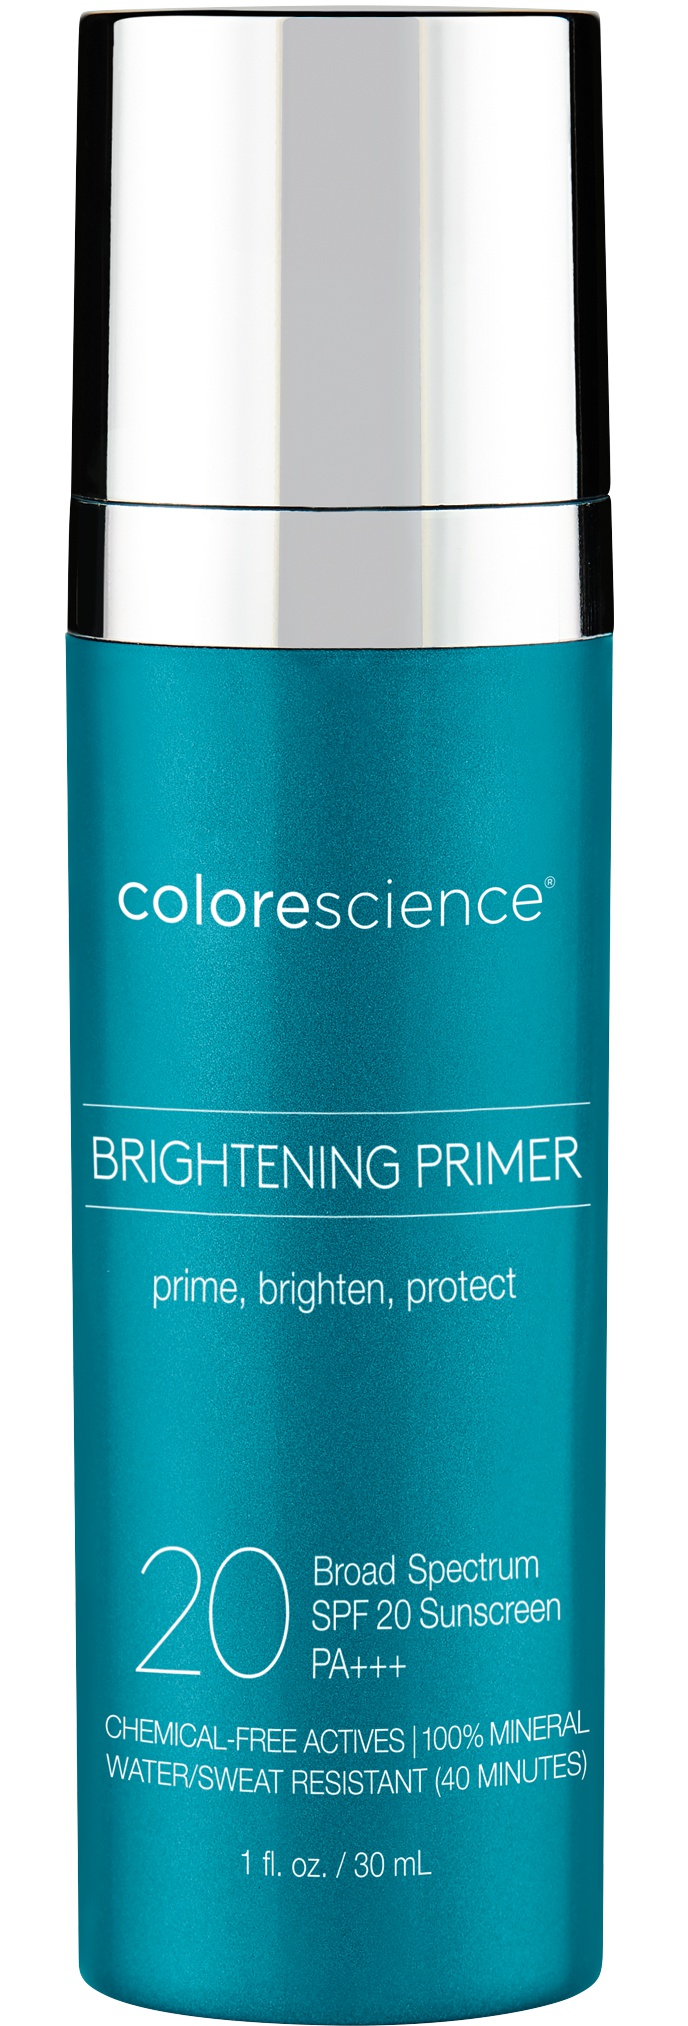 Colorescience Brightening Primer SPF 20